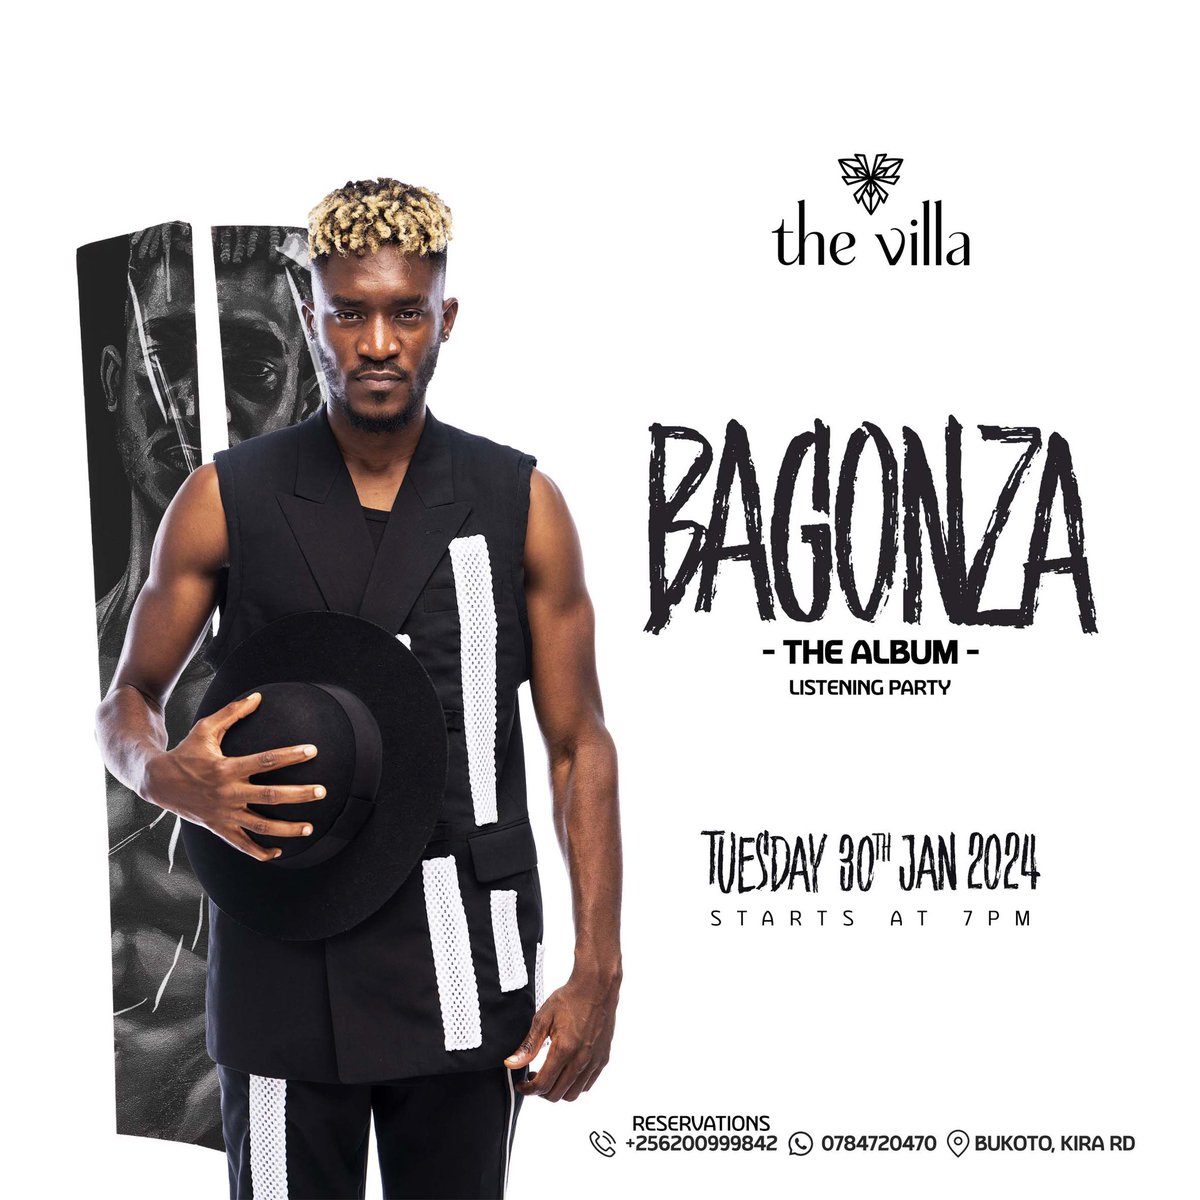 Bagonza The Album 💿 Listener’s party @thevillaUG #OnTuesday 🐐 #AllMyFansAreInvited 

#GraphicsBy @Jhay_Efekt 🇺🇬 
#DopePicBy @manzi_rolland 🇺🇬 

#Bagonza #BagonzaTheAlbum #ListeningParty